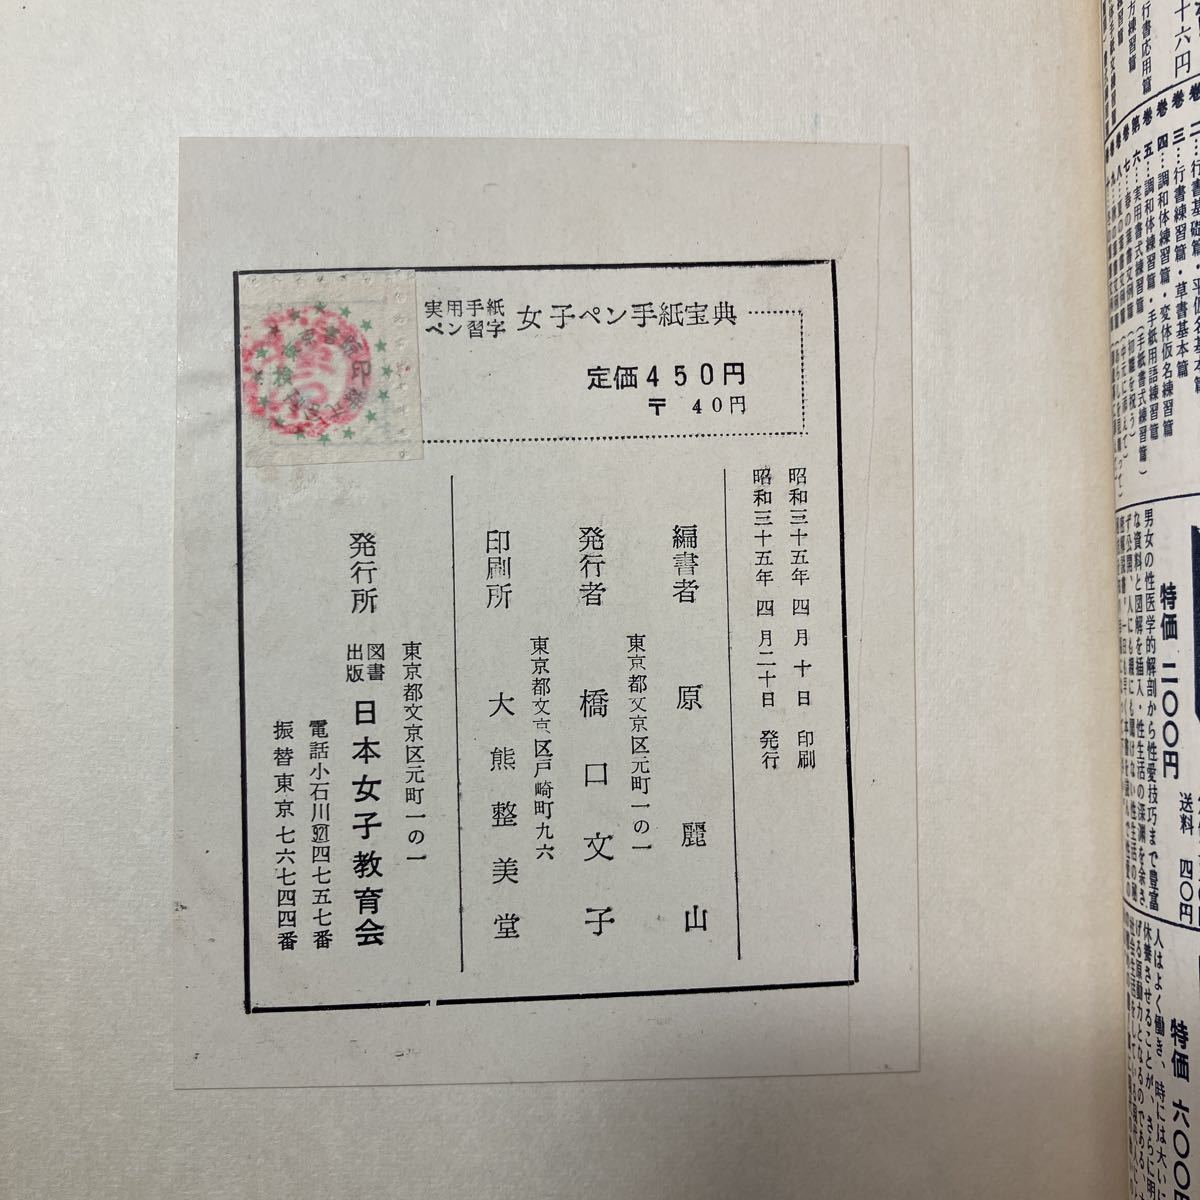 zaa-475! pen . character practical use letter woman pen letter ... beauty mountain ( compilation ) Japan woman education .(1960/4/20)